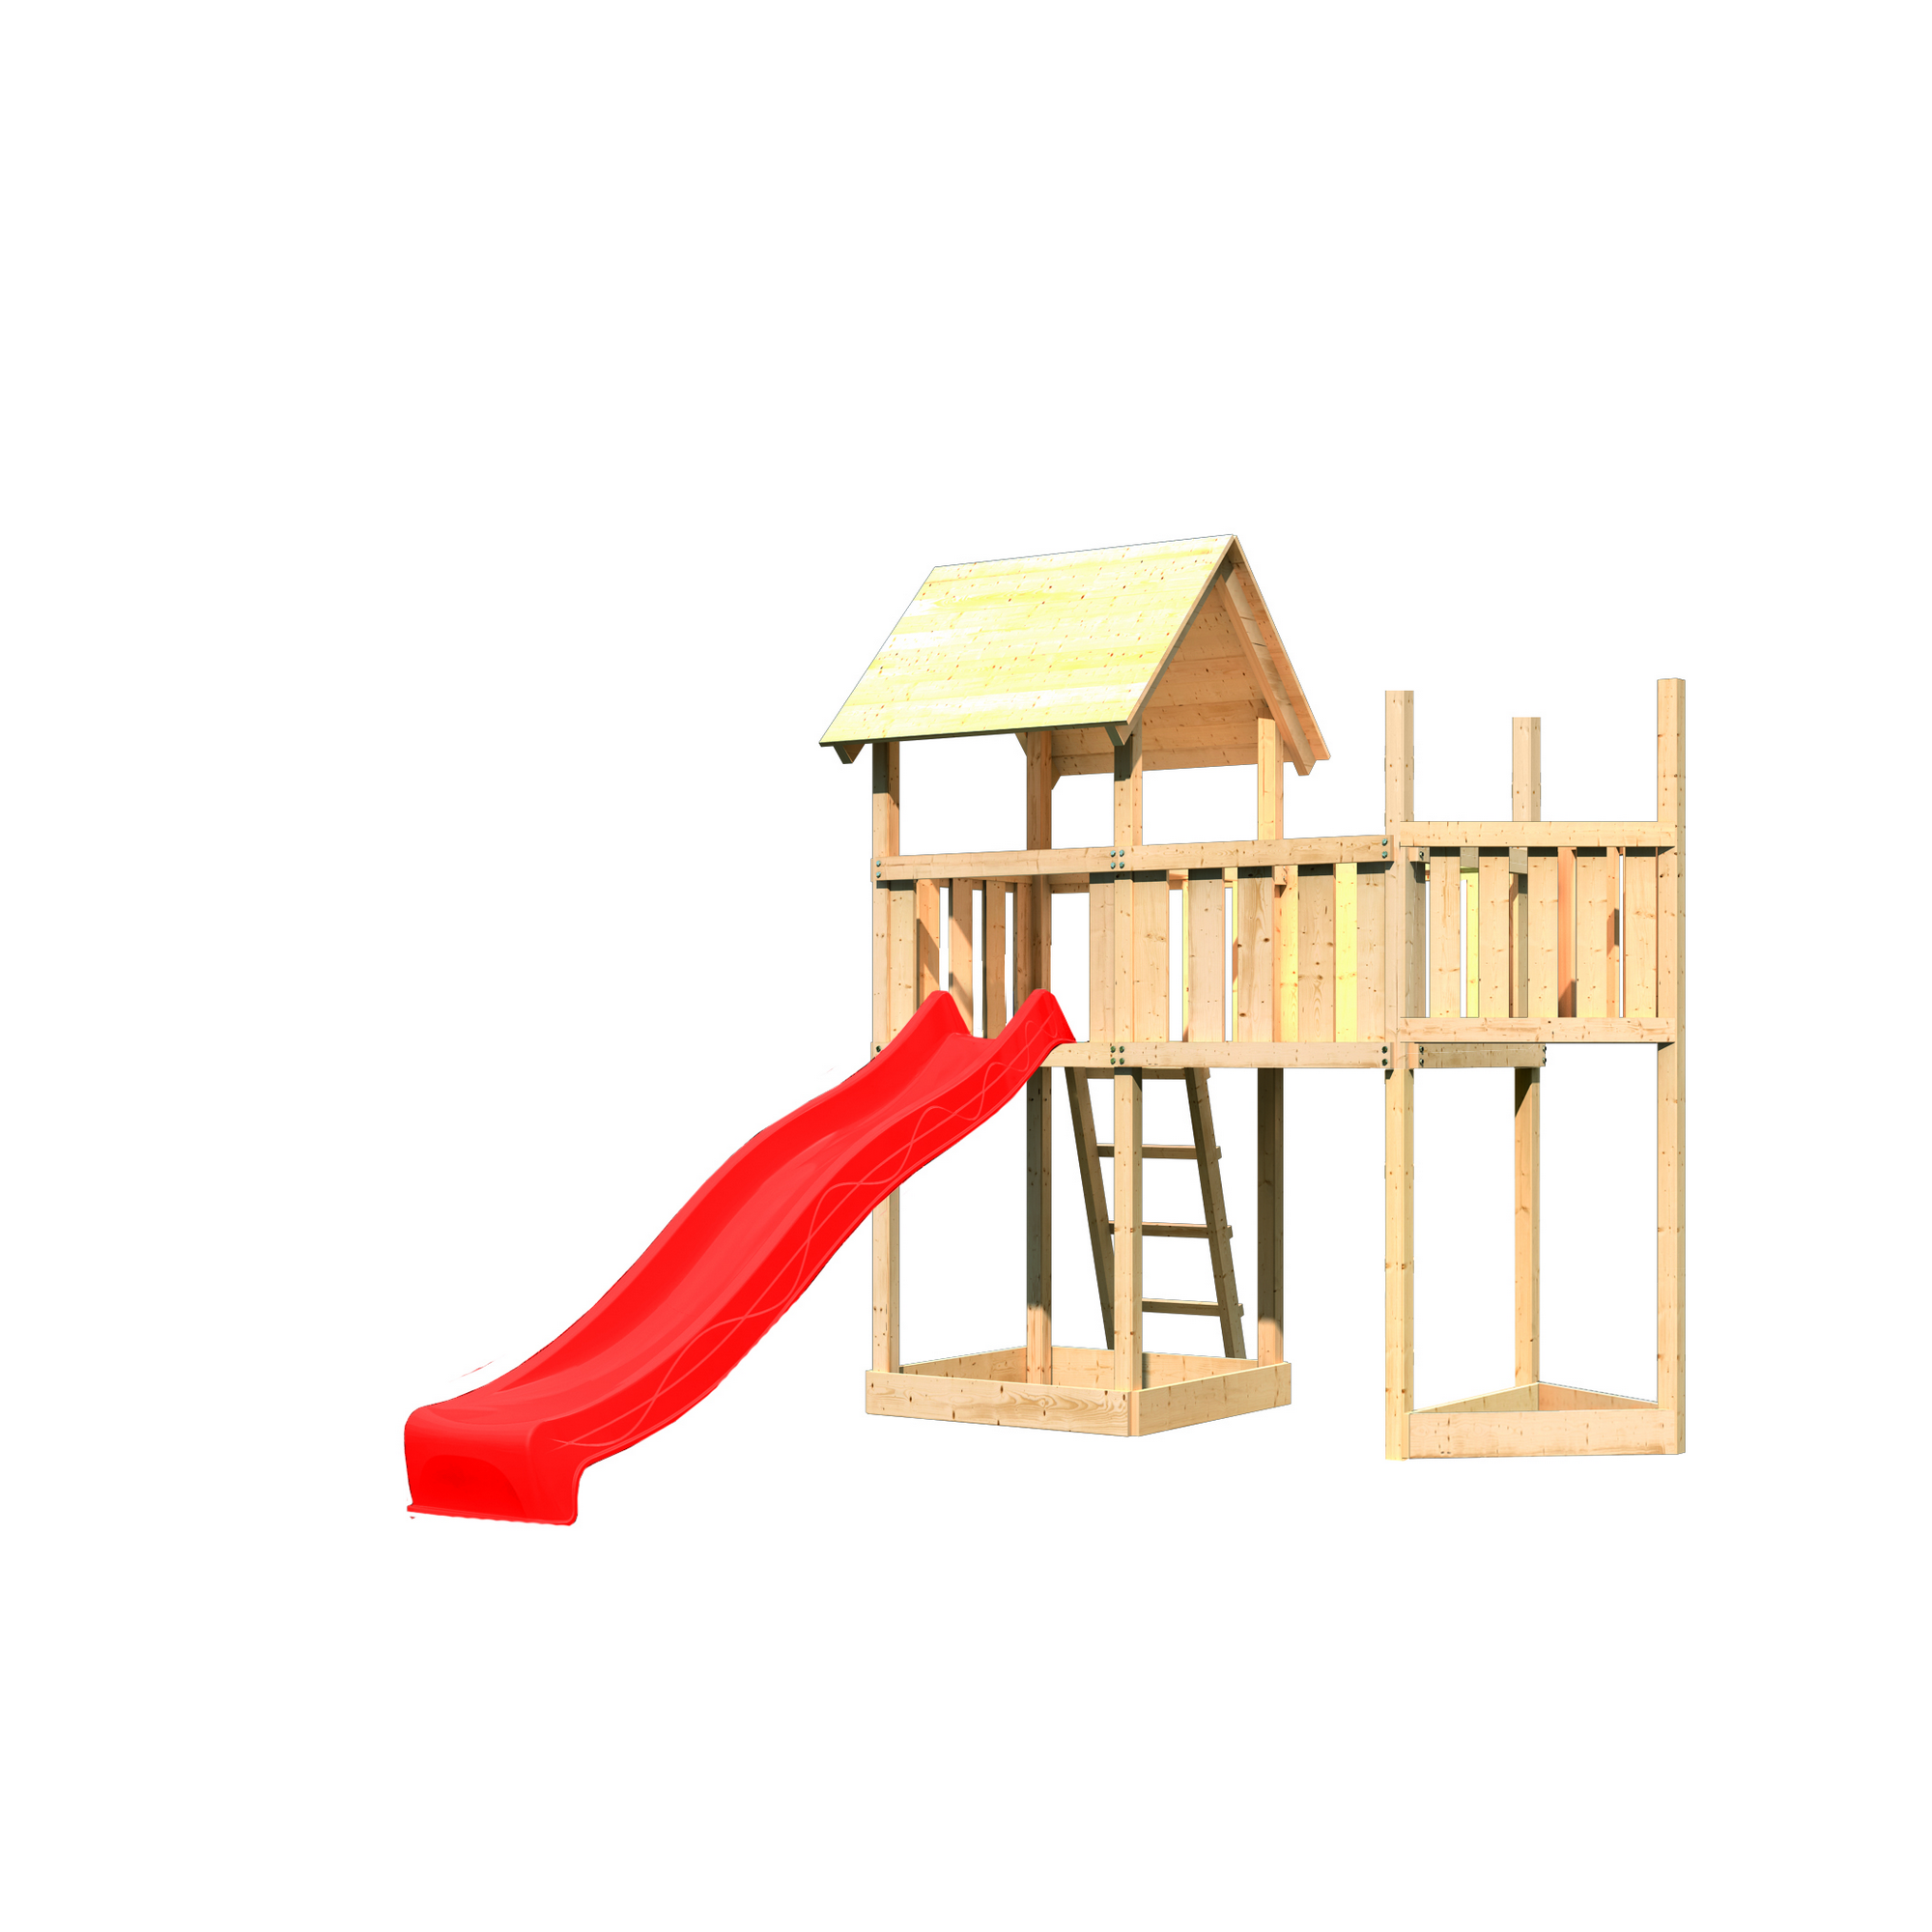 Kinderspielturm 'Lotti' Schiffsanbau, Anbauplattform, Rutsche rot, 287,5 x 107 x 291 cm + product picture